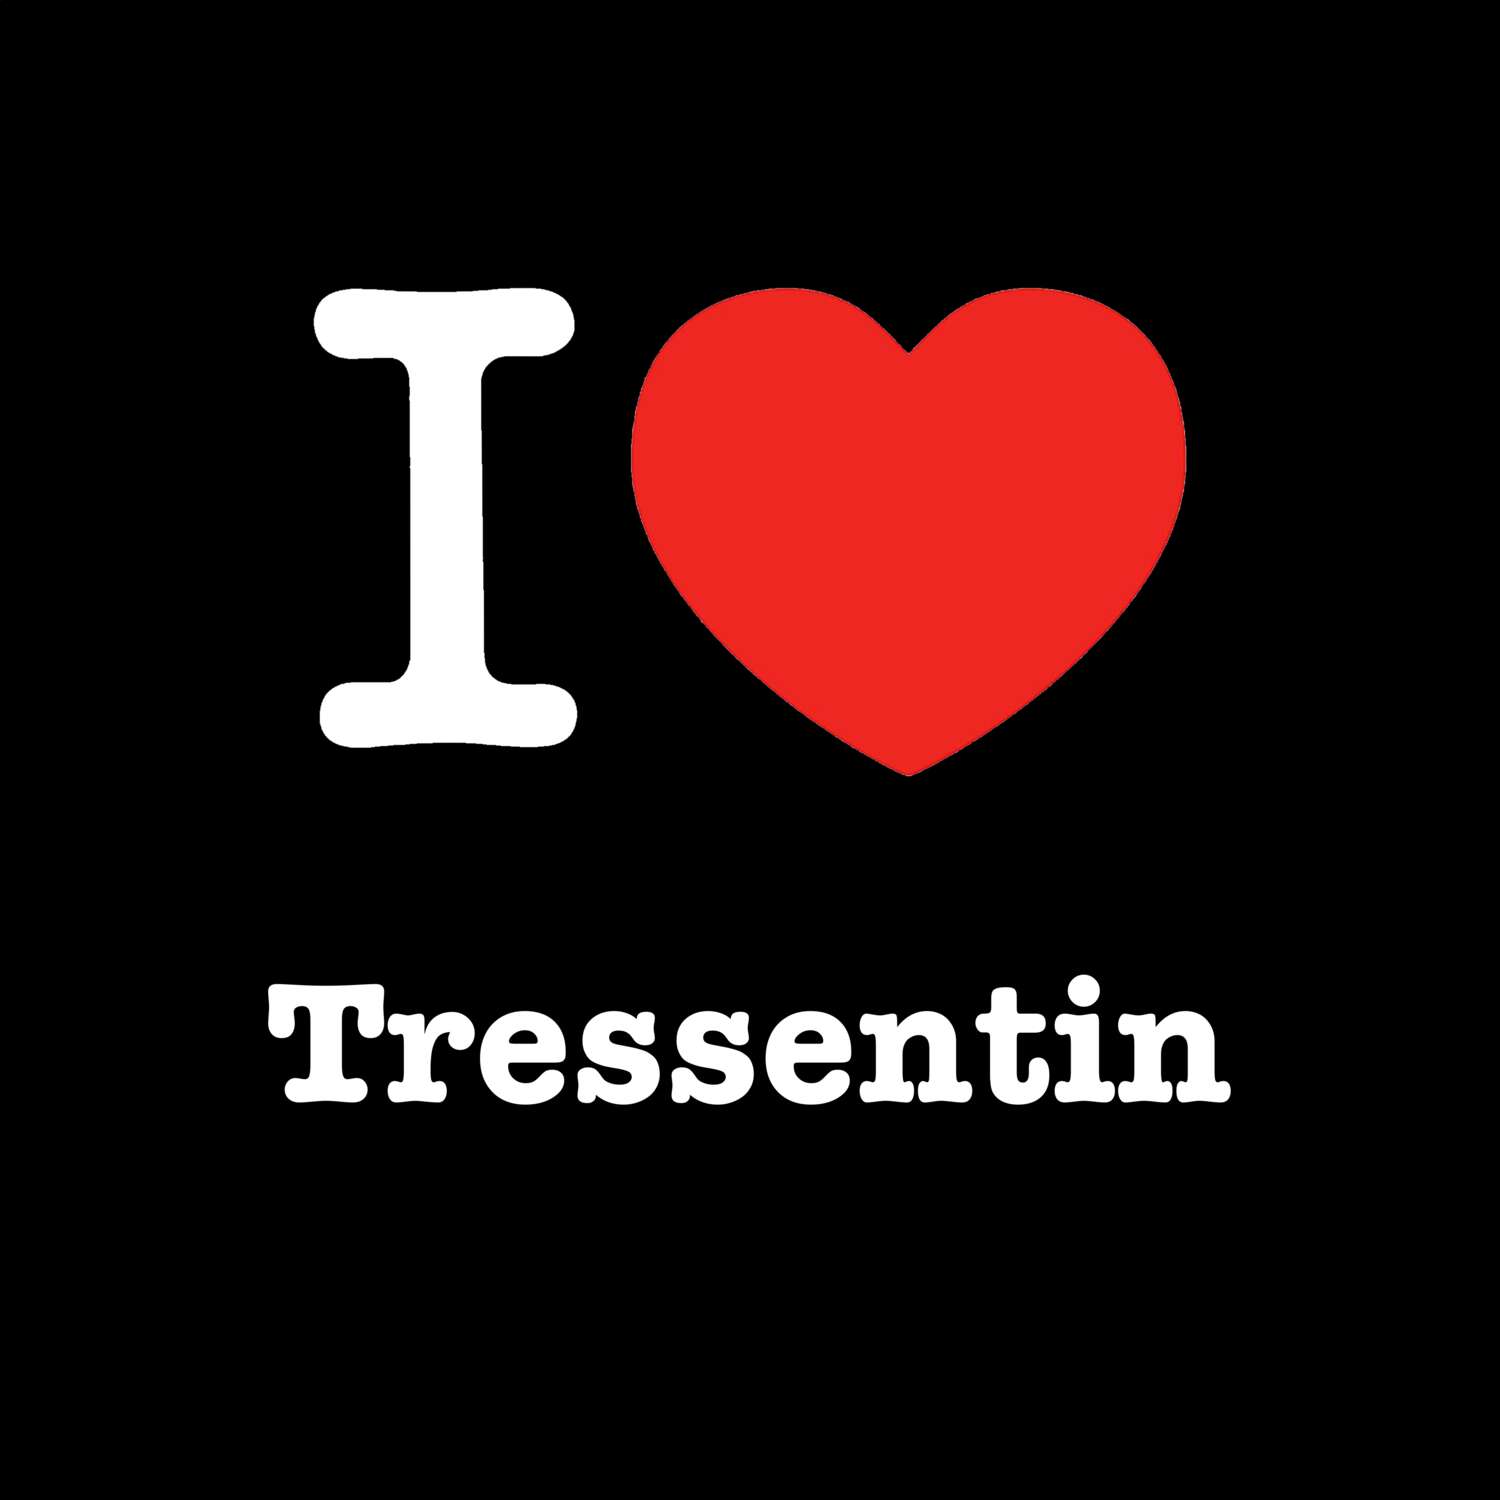 Tressentin T-Shirt »I love«